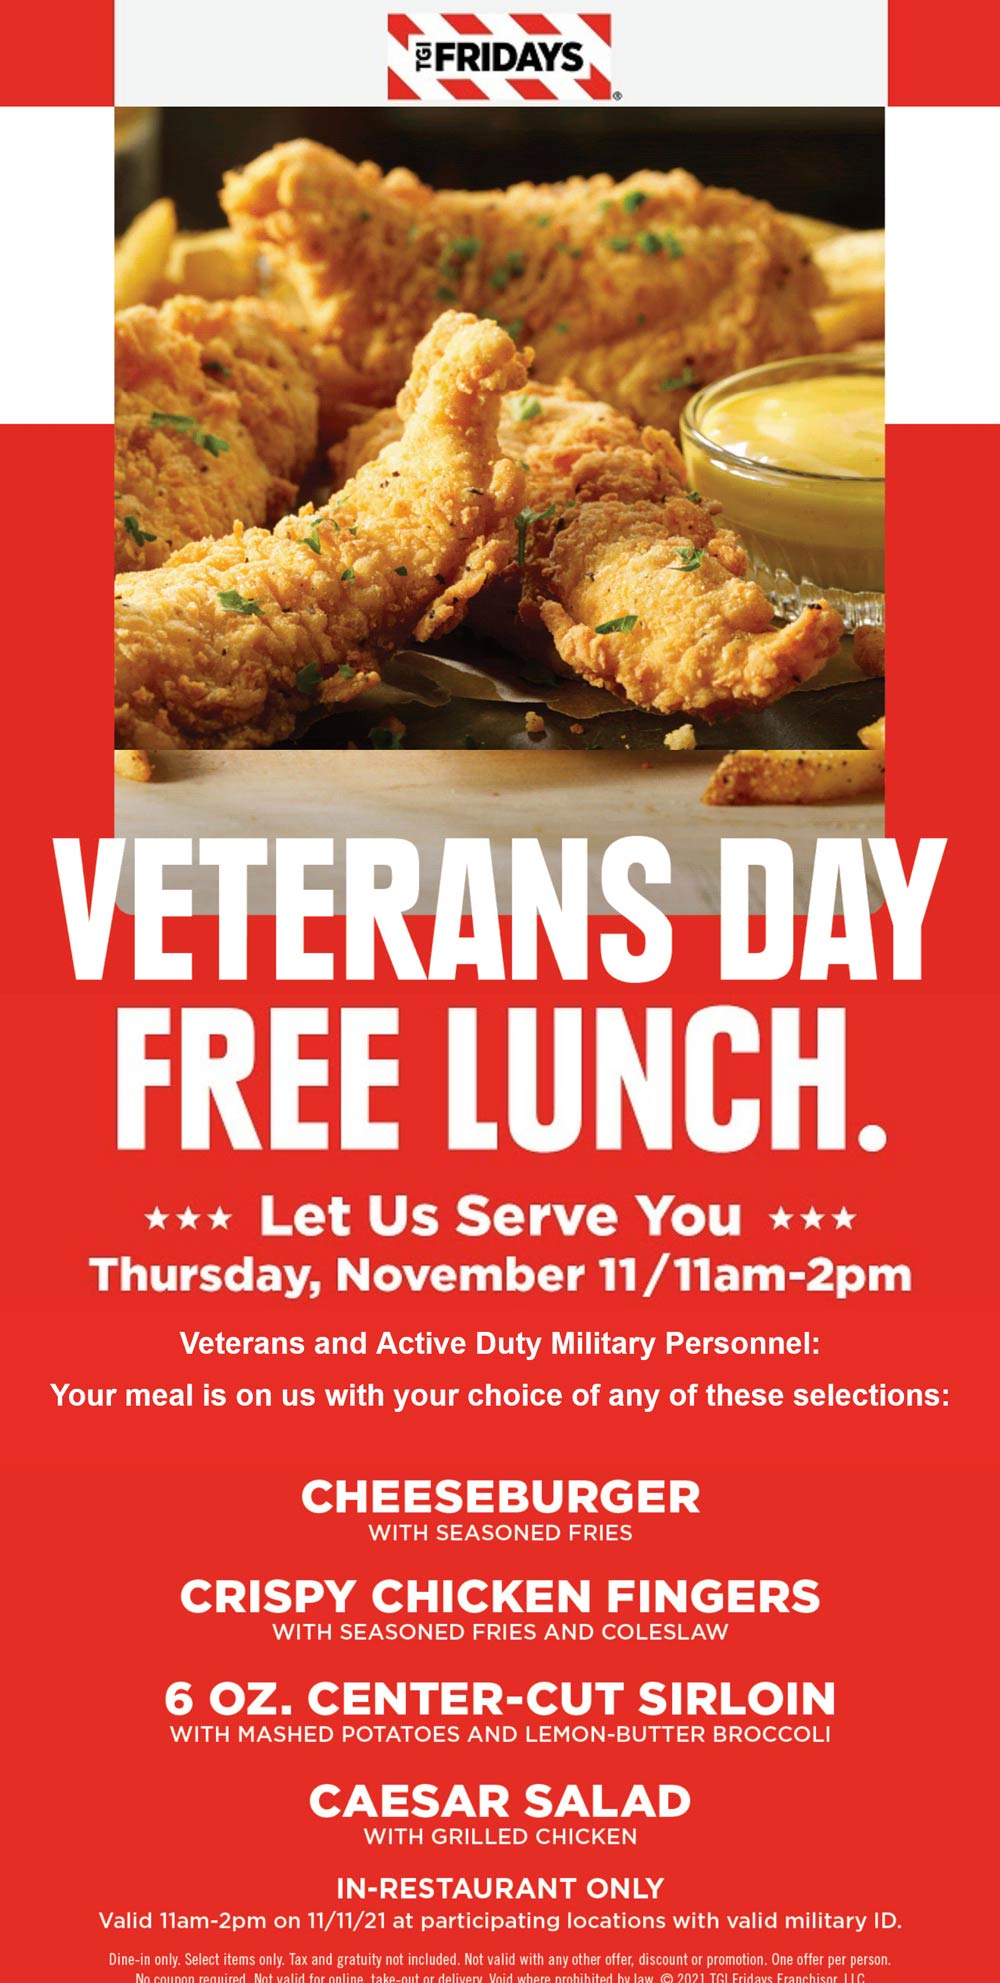 TGI Fridays restaurants Coupon  Veterans get a free lunch today at TGI Fridays #tgifridays 